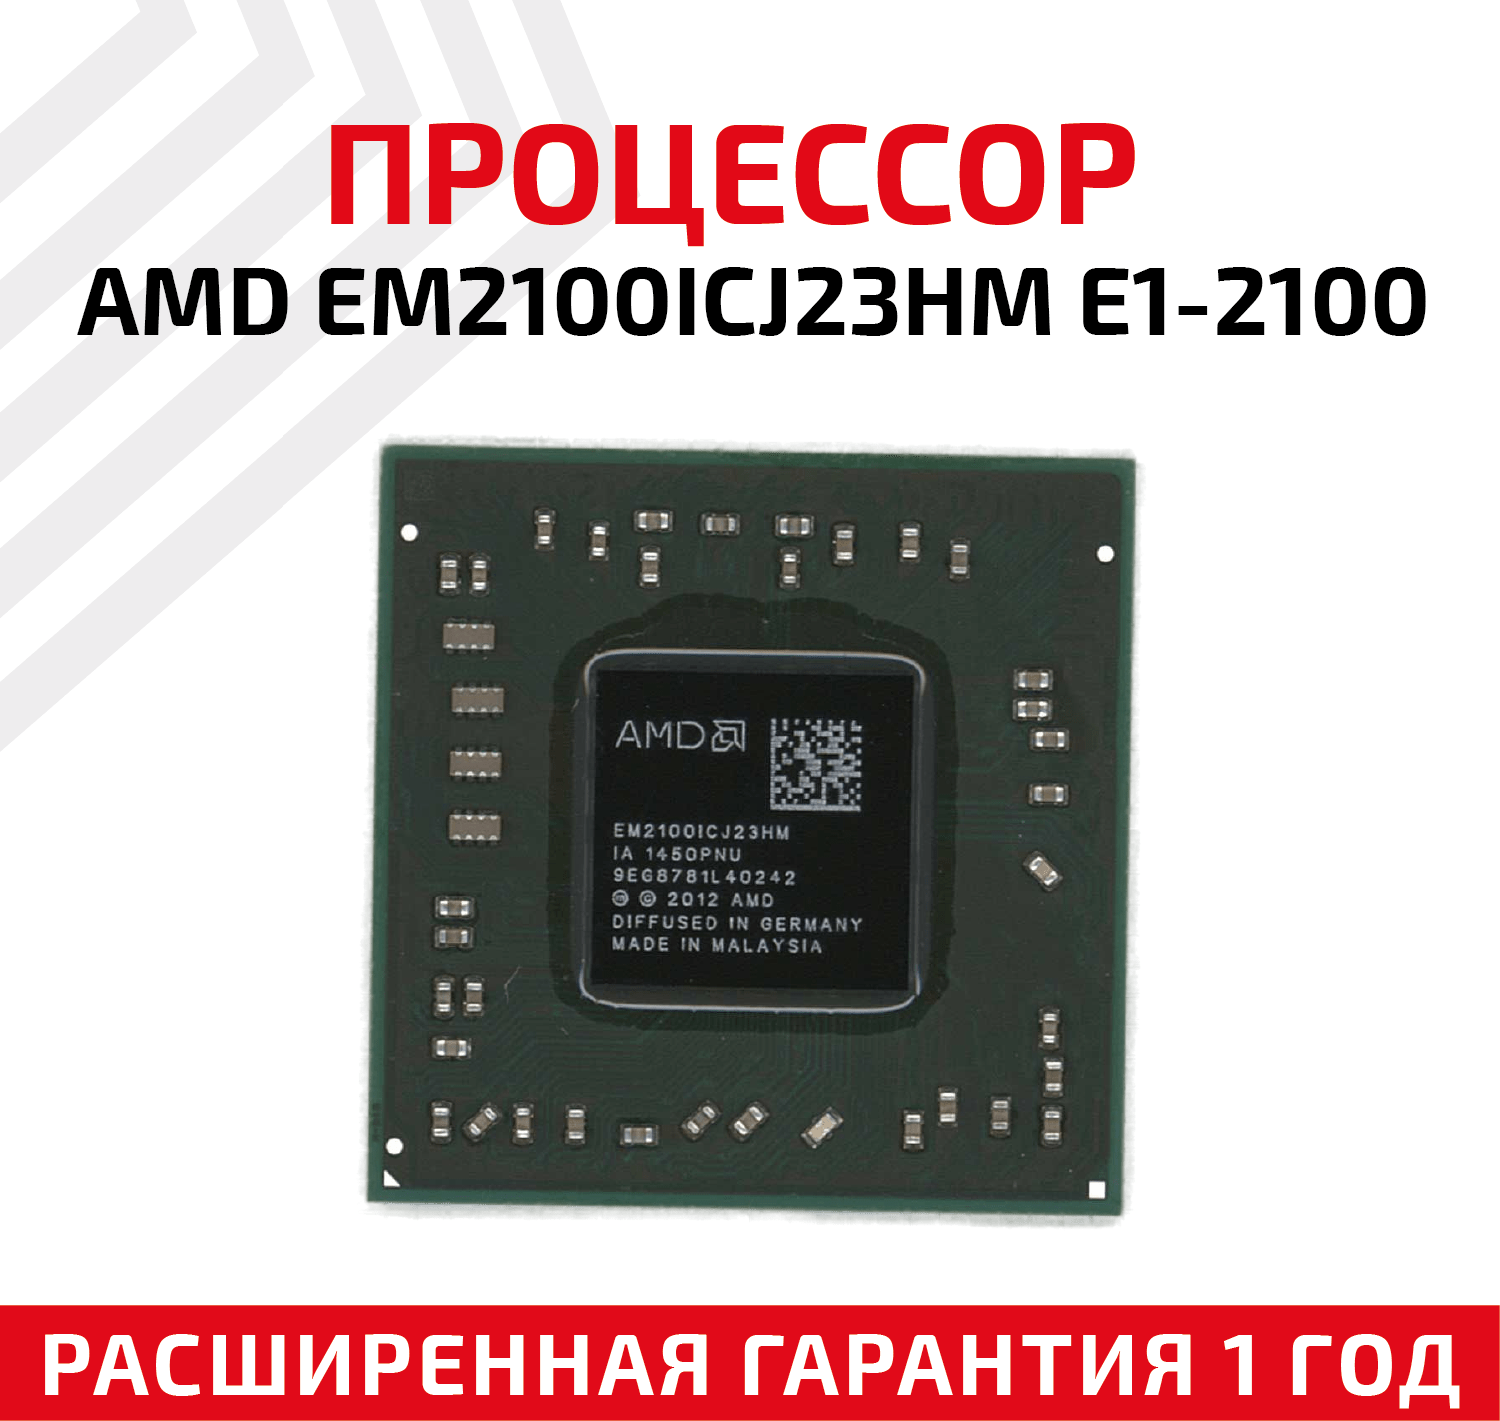 Процессор AMD EM2100ICJ23HM E1-2100 для ноутбука